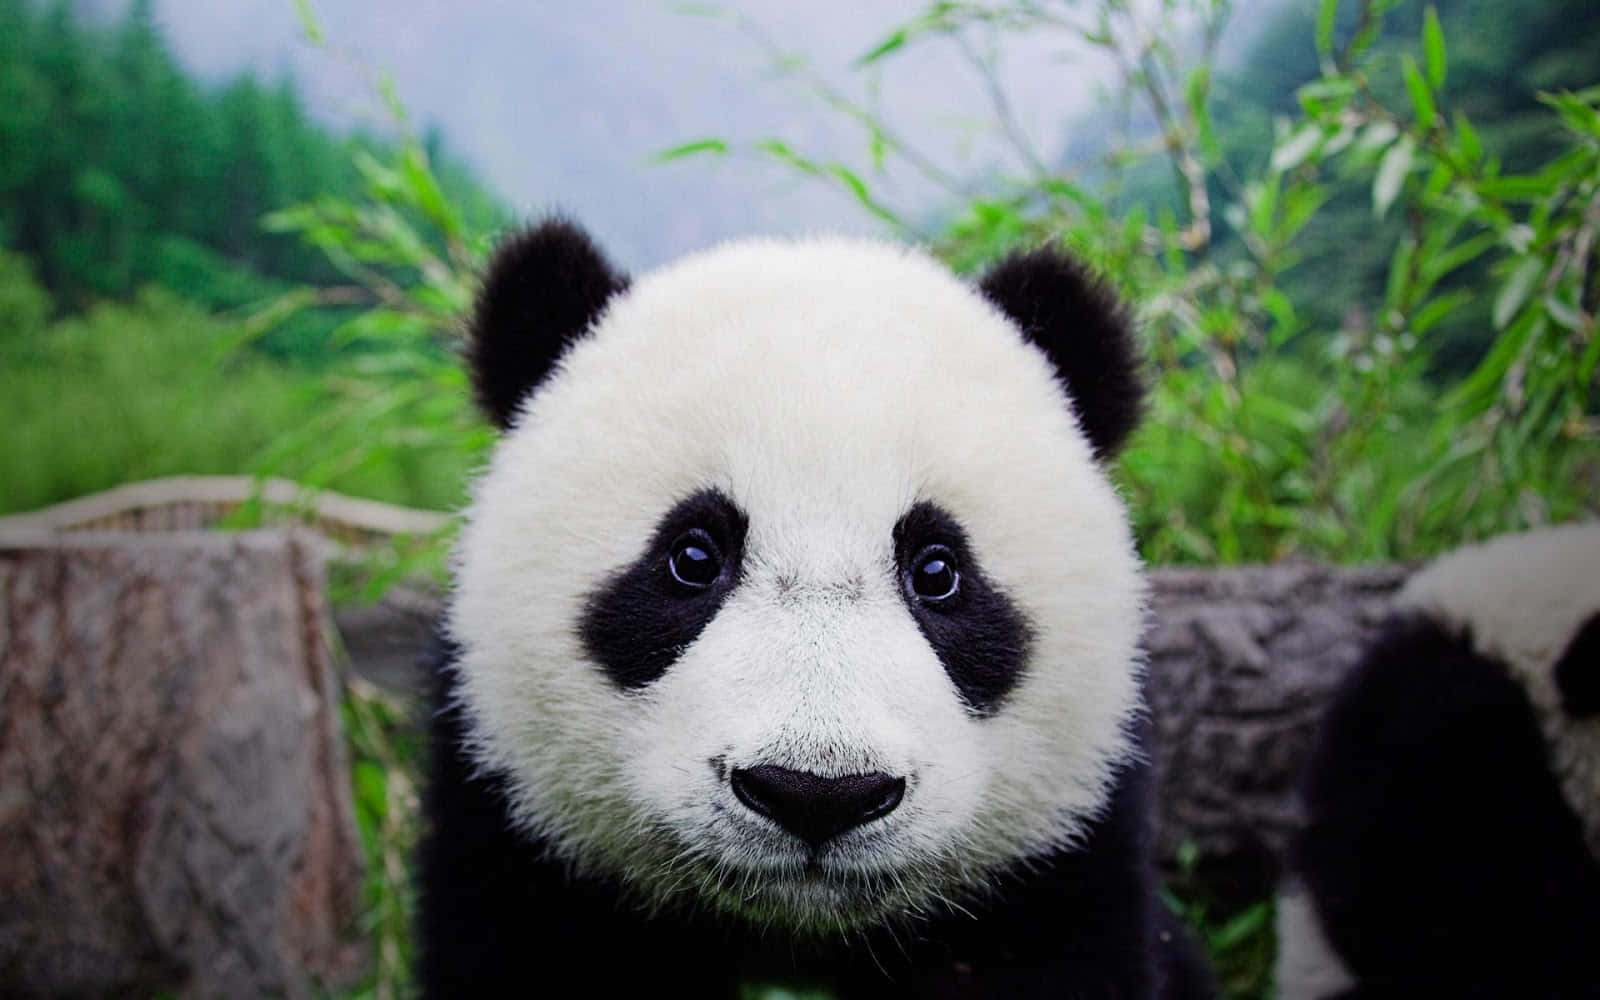 Cute panda peeking out from behind a bamboo stalk